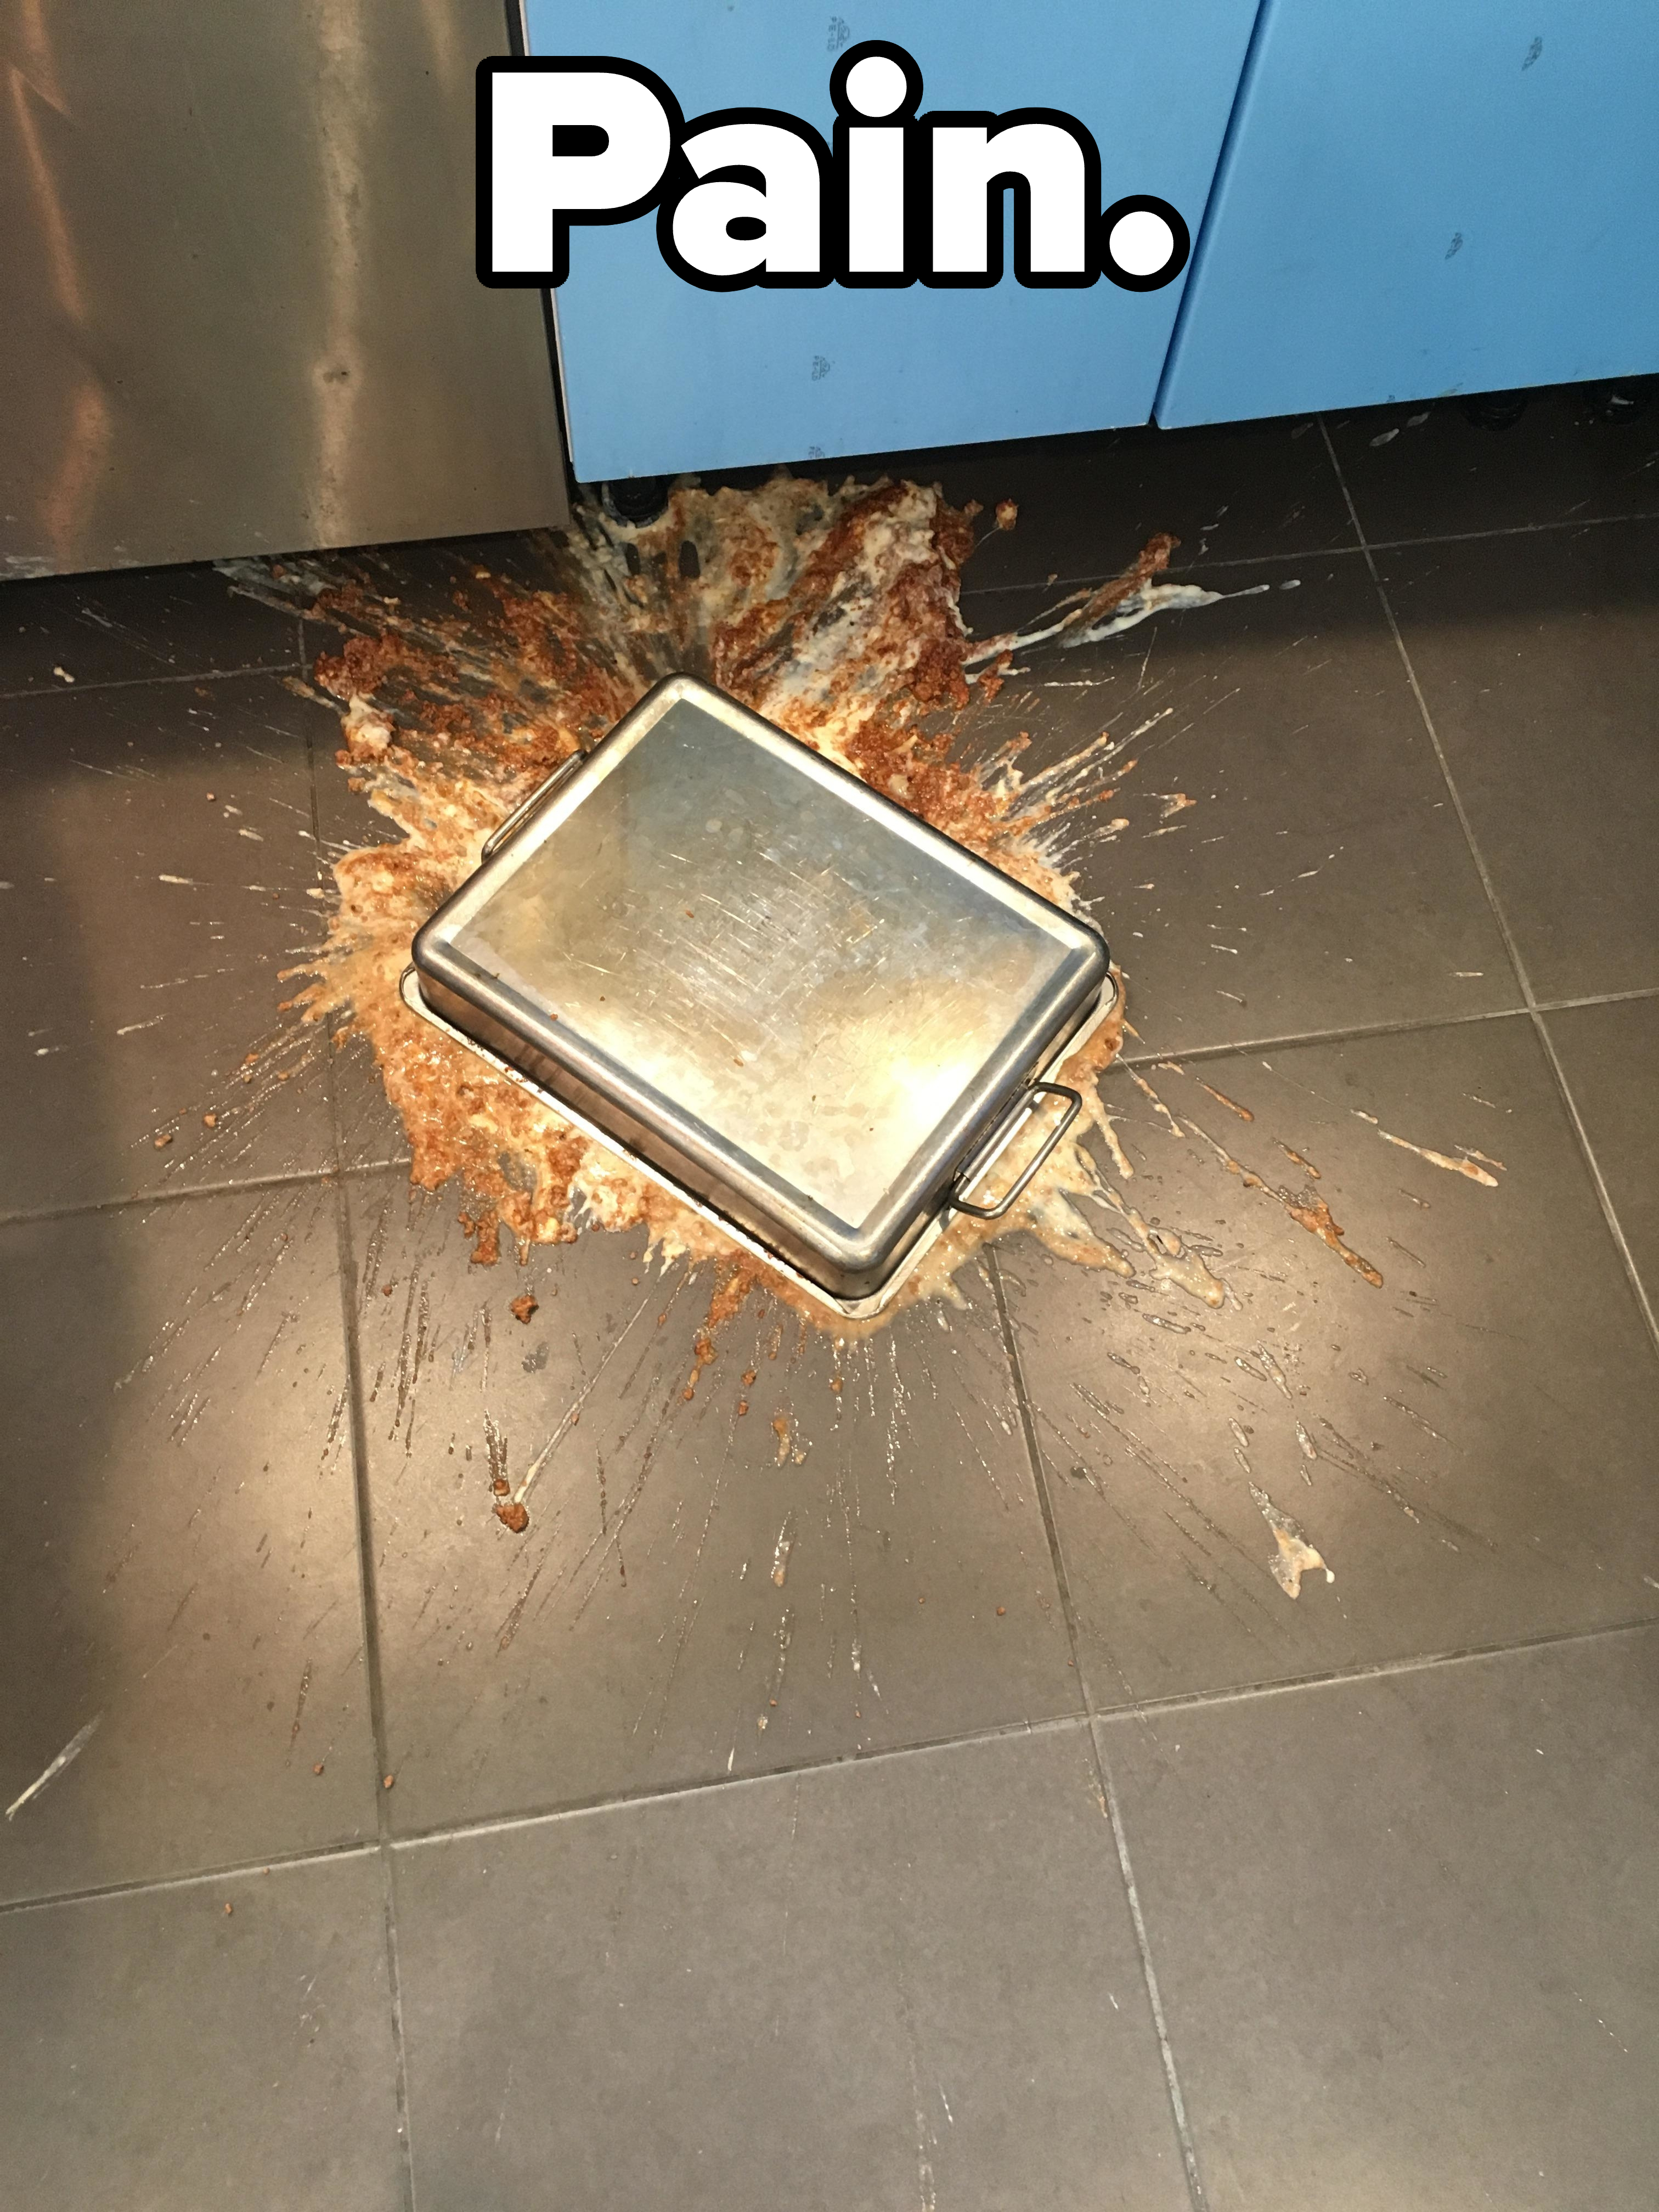 &quot;Pain&quot;: A pan of lasagna fallen on the kitchen floor